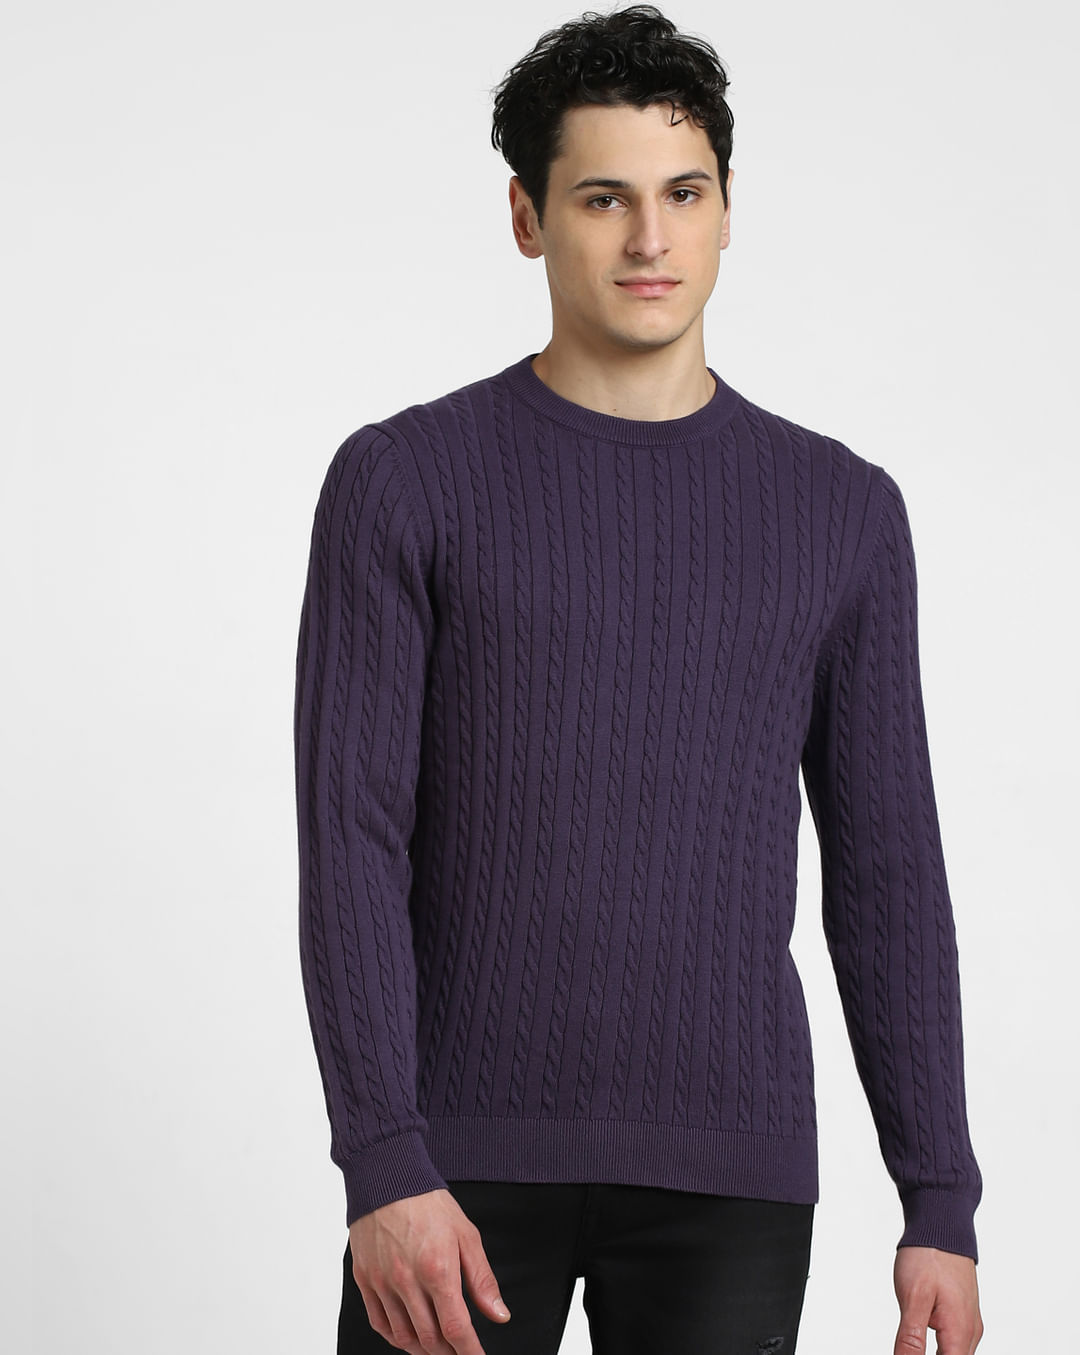 Dark Purple Knitted Sweater